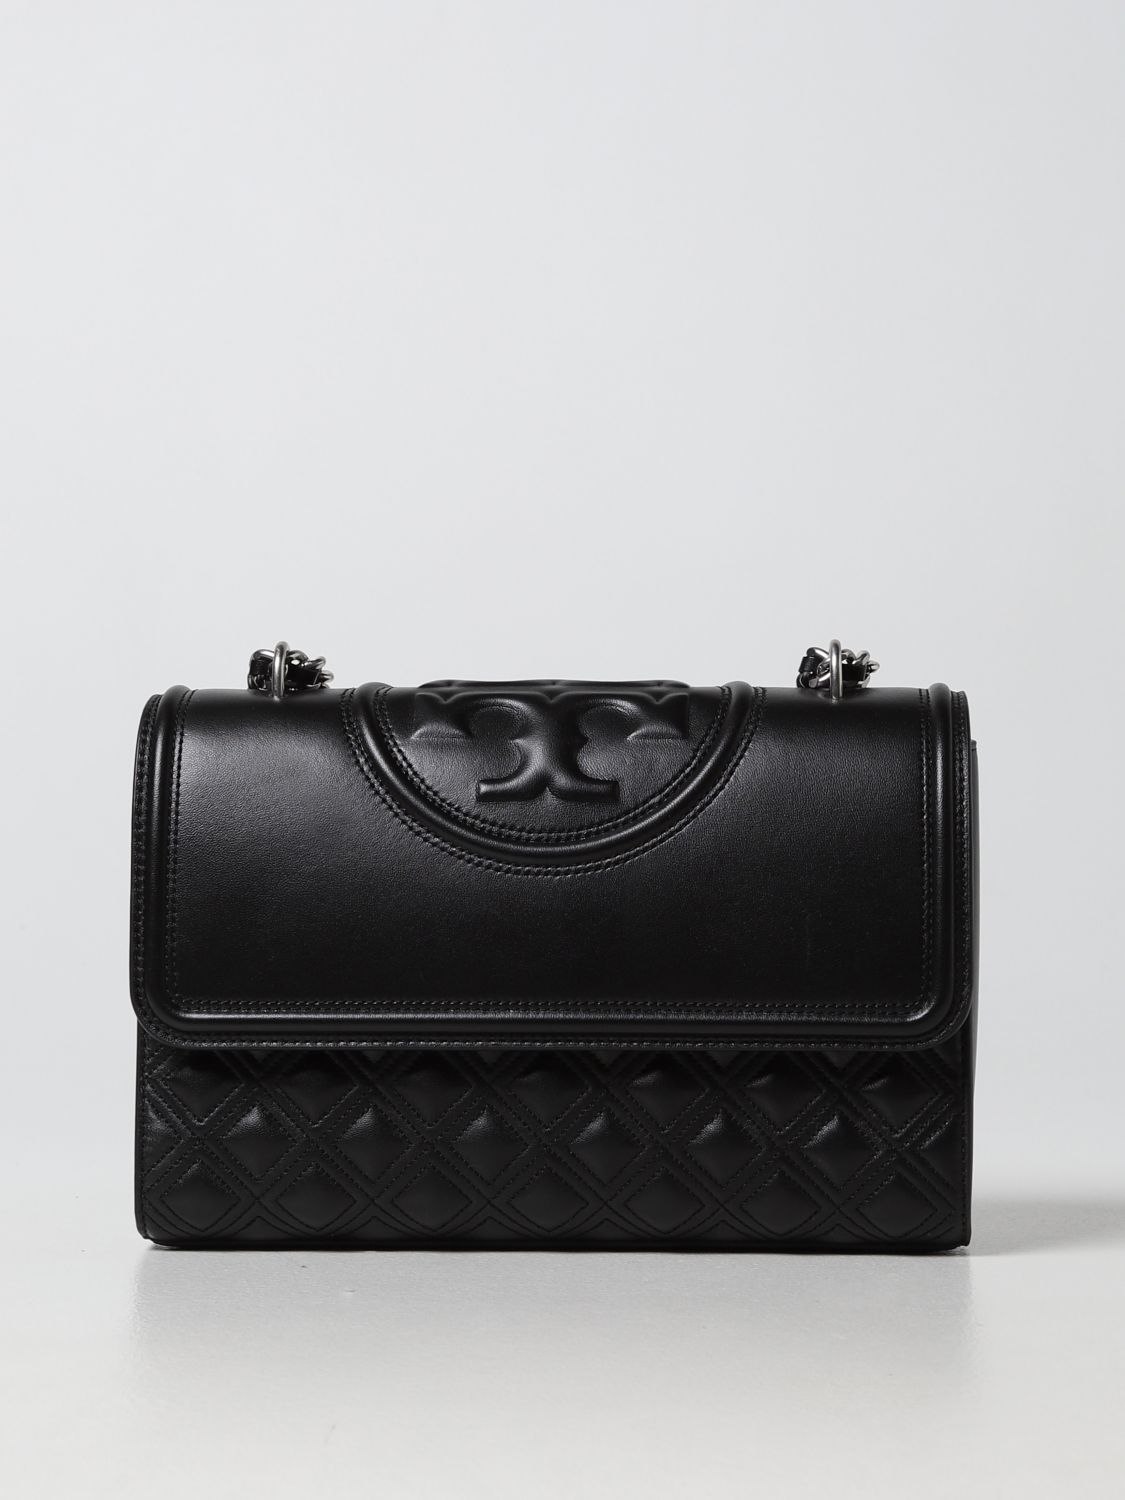 TORY BURCH: Fleming leather bag - Black | Tory Burch crossbody bags 76997  online on 